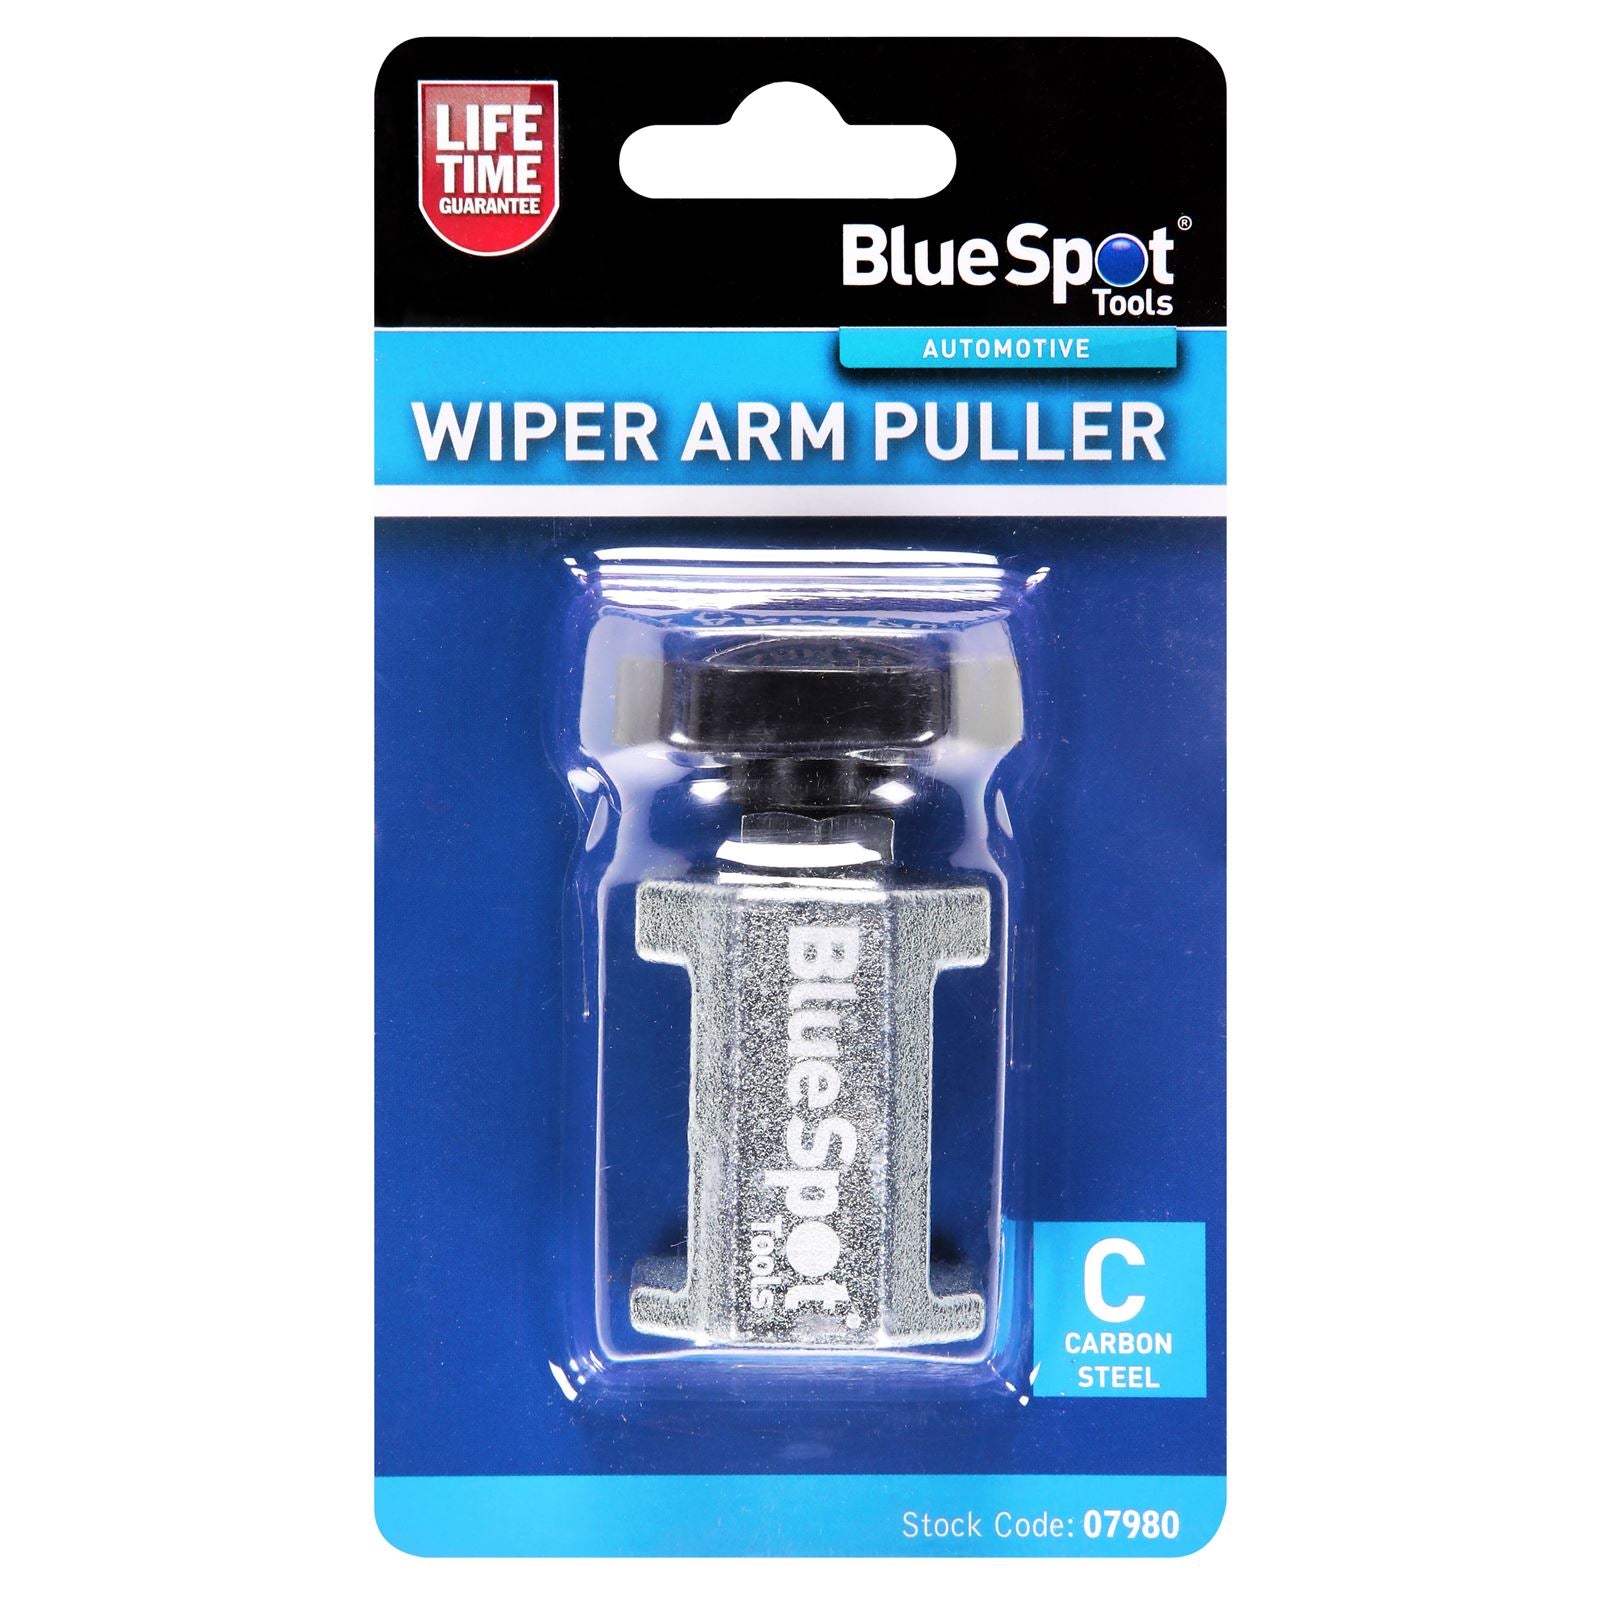 BlueSpot Wiper Arm Puller